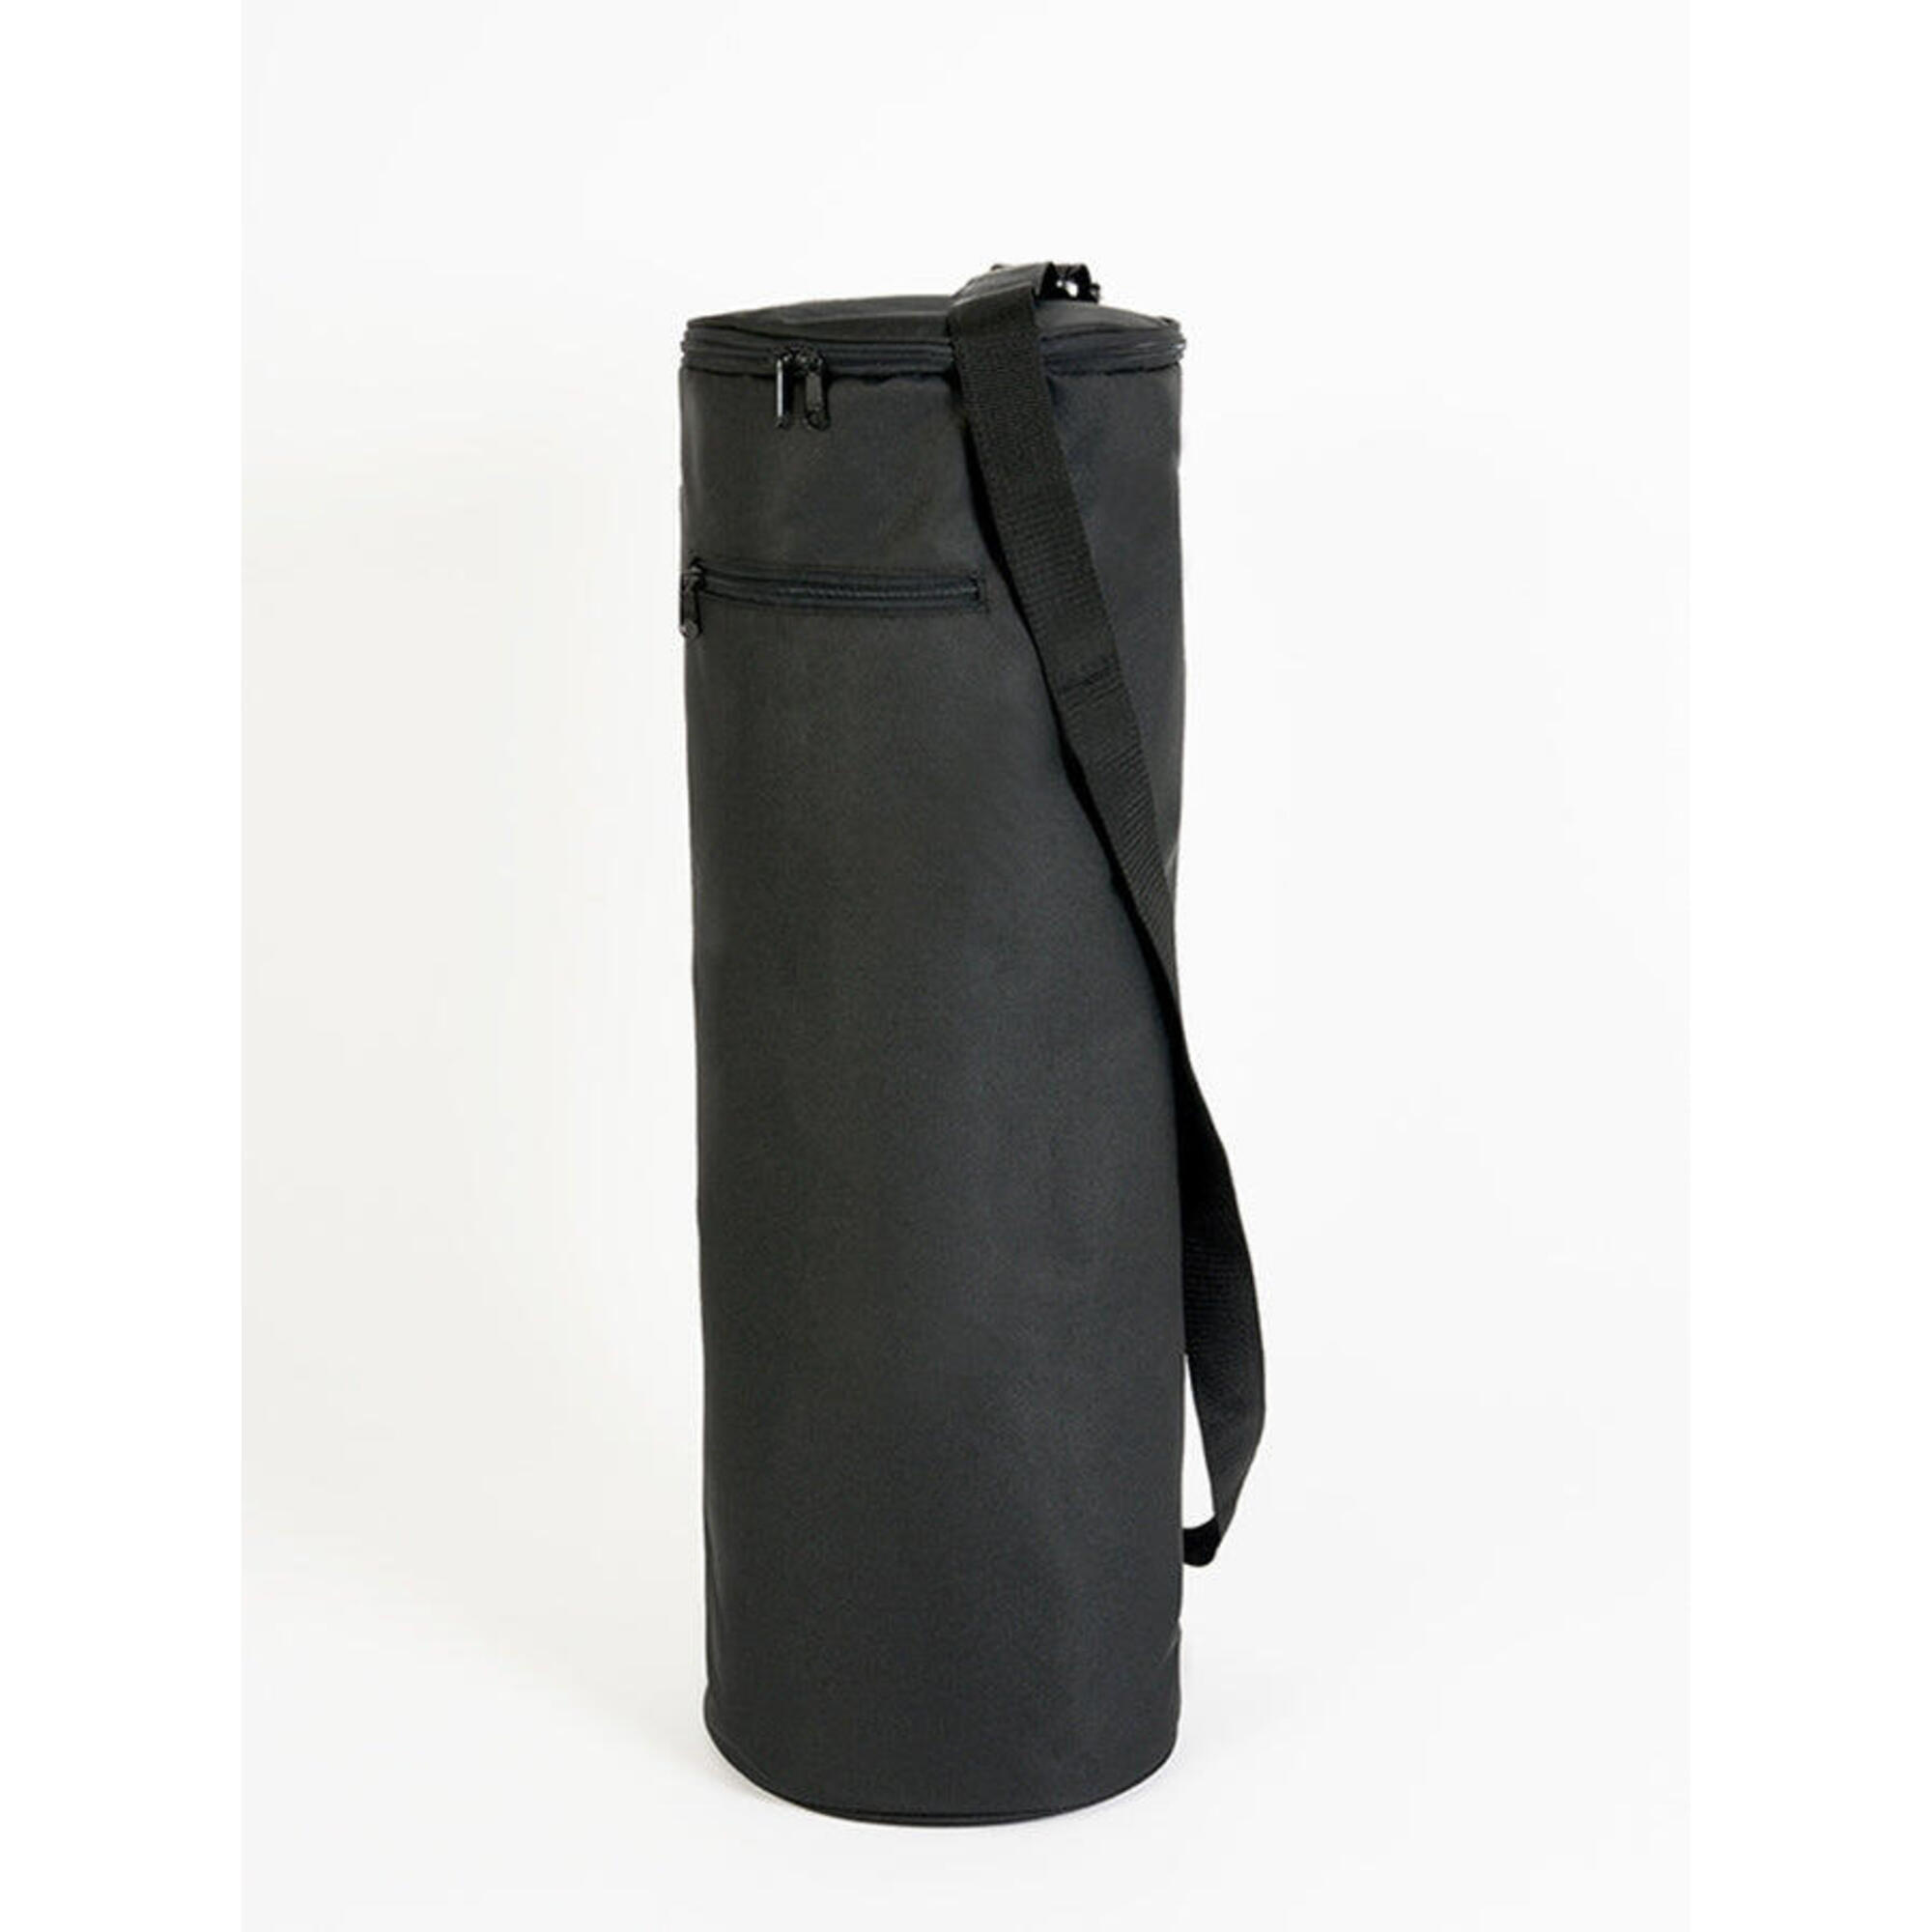 Yoga Studio Yoga Kit Bag - Top Loading - Black 1/3